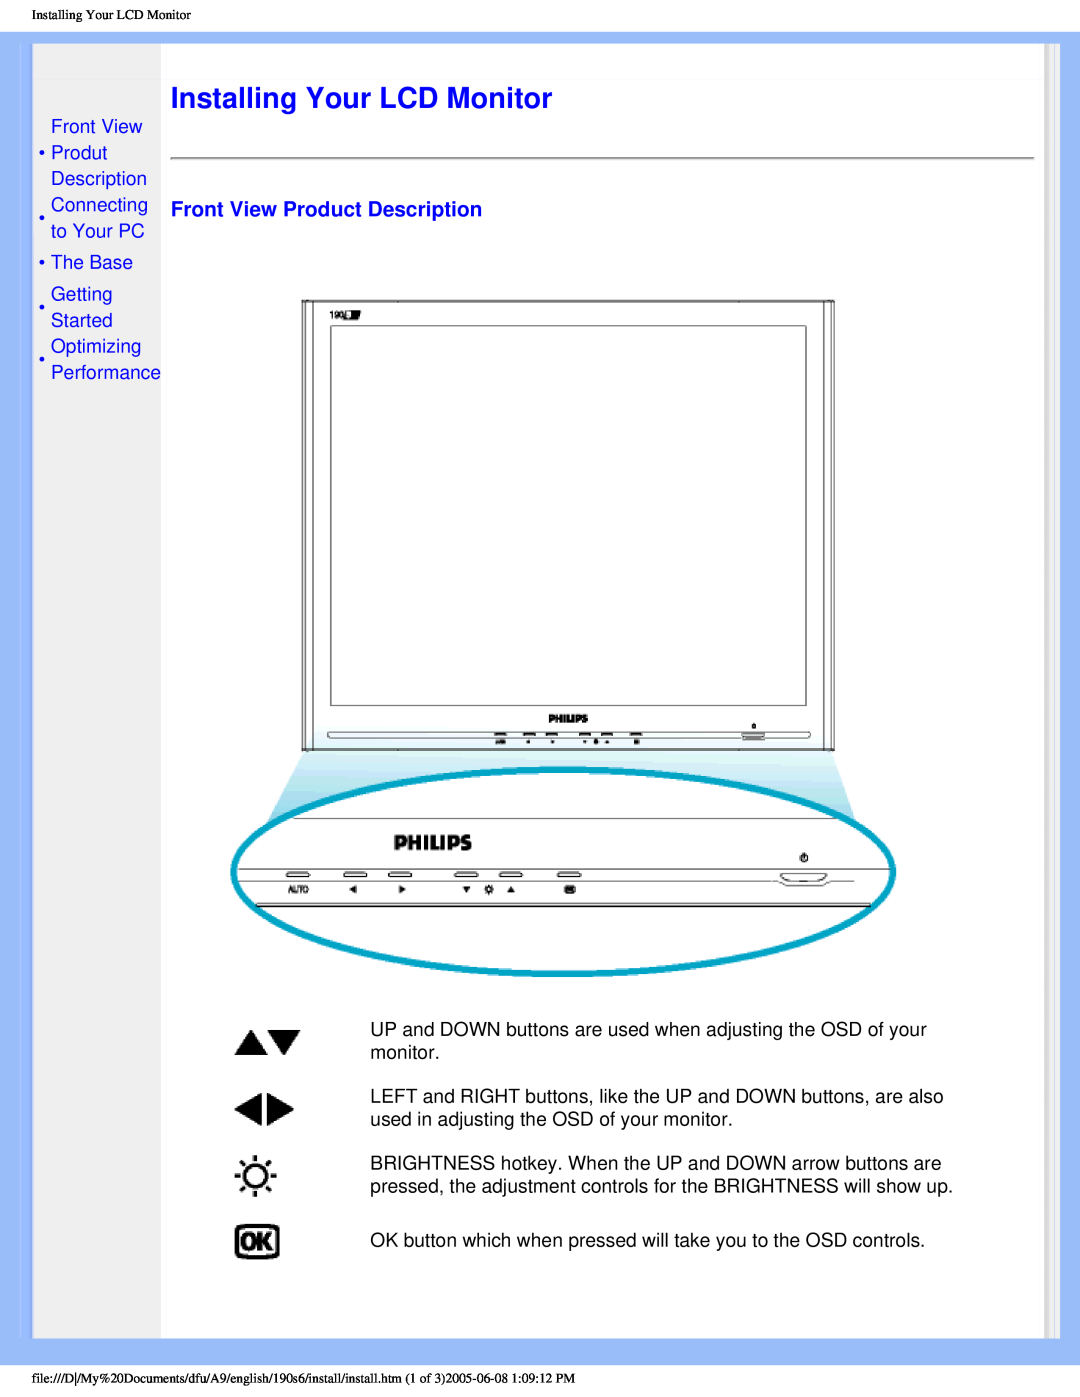 Philips 190P6 user manual Installing Your LCD Monitor, Front View Product Description, Front View Produt Description 